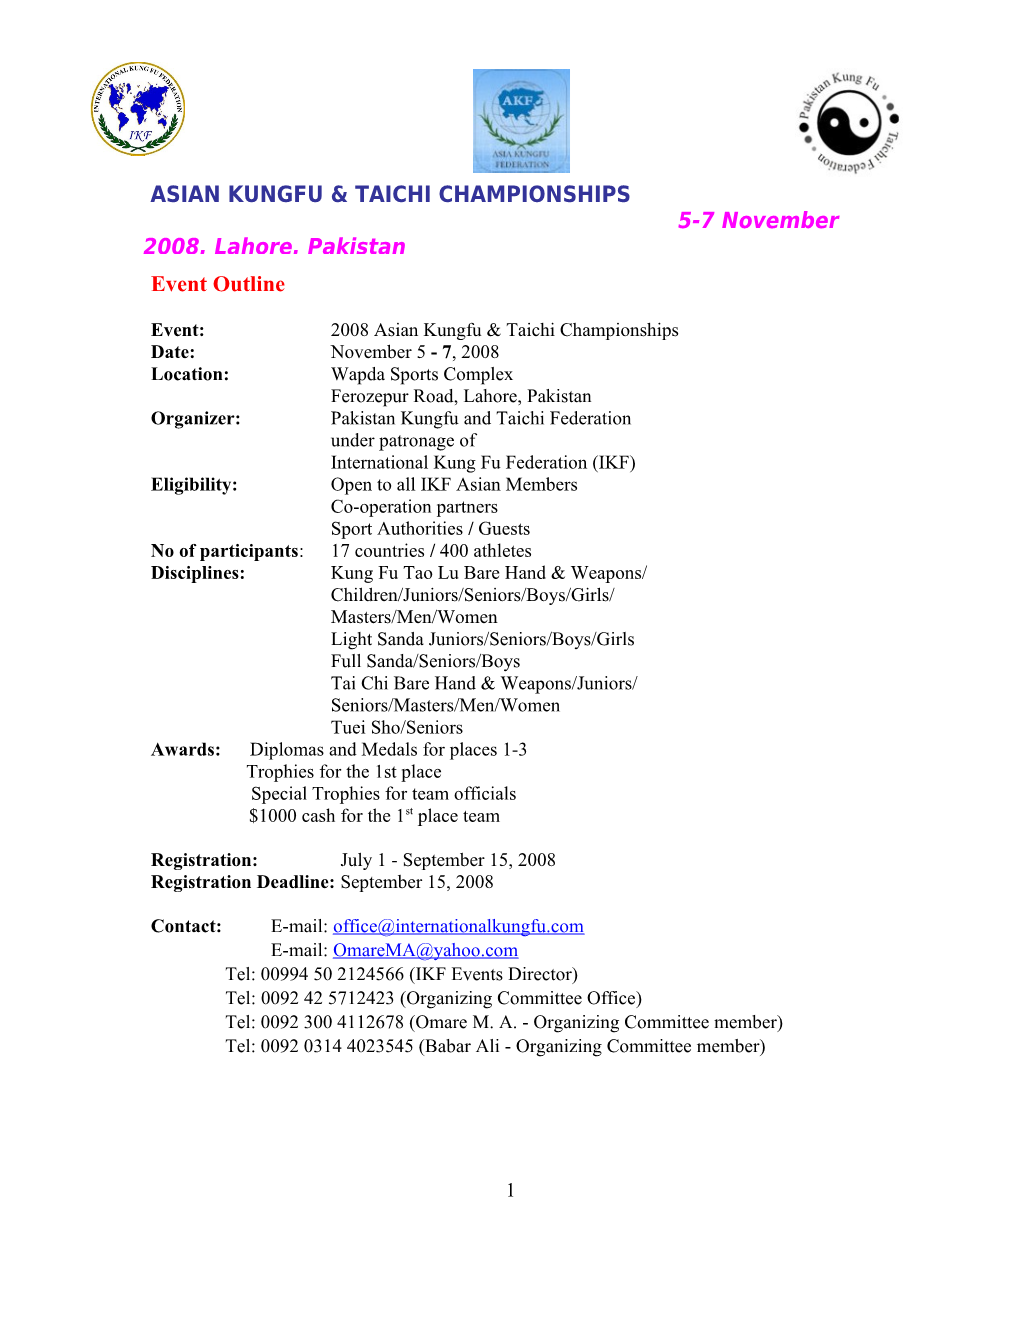 Event: 2008 Asian Kungfu & Taichi Championships